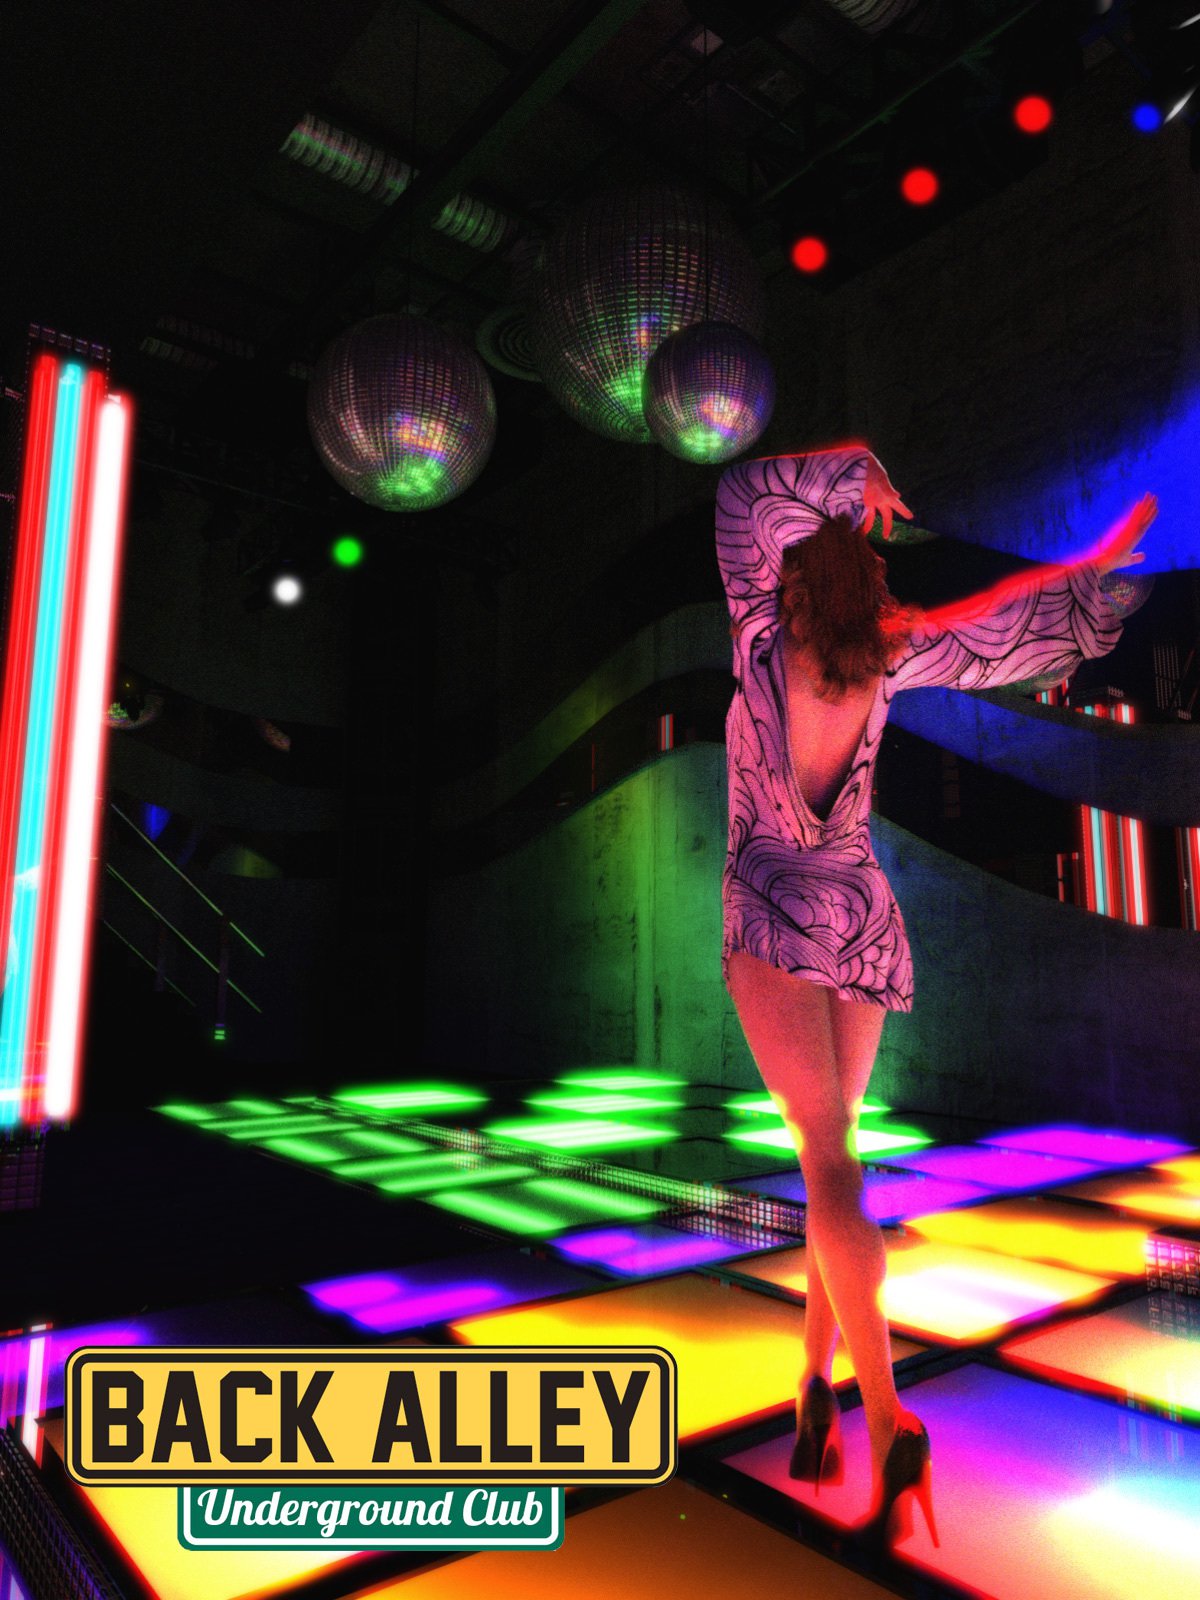 Back Alley Underground Club for DS Iray_DAZ3D下载站